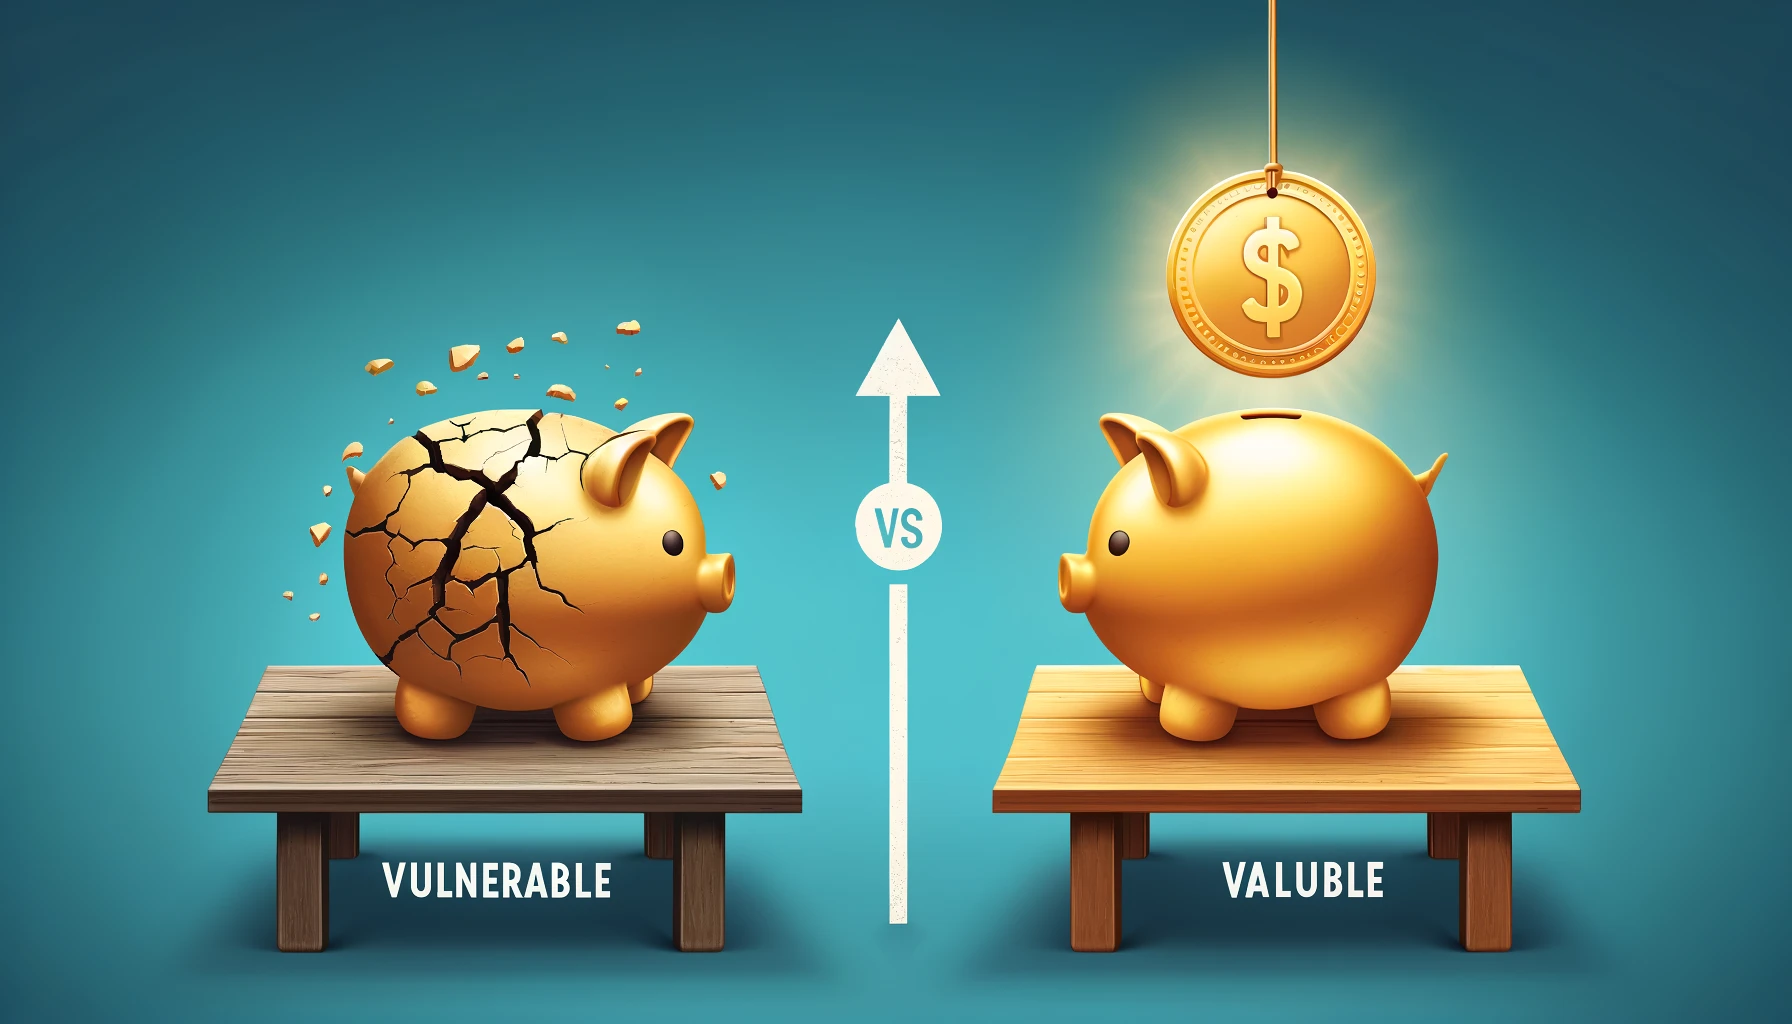 Vulnerable vs. Valuable